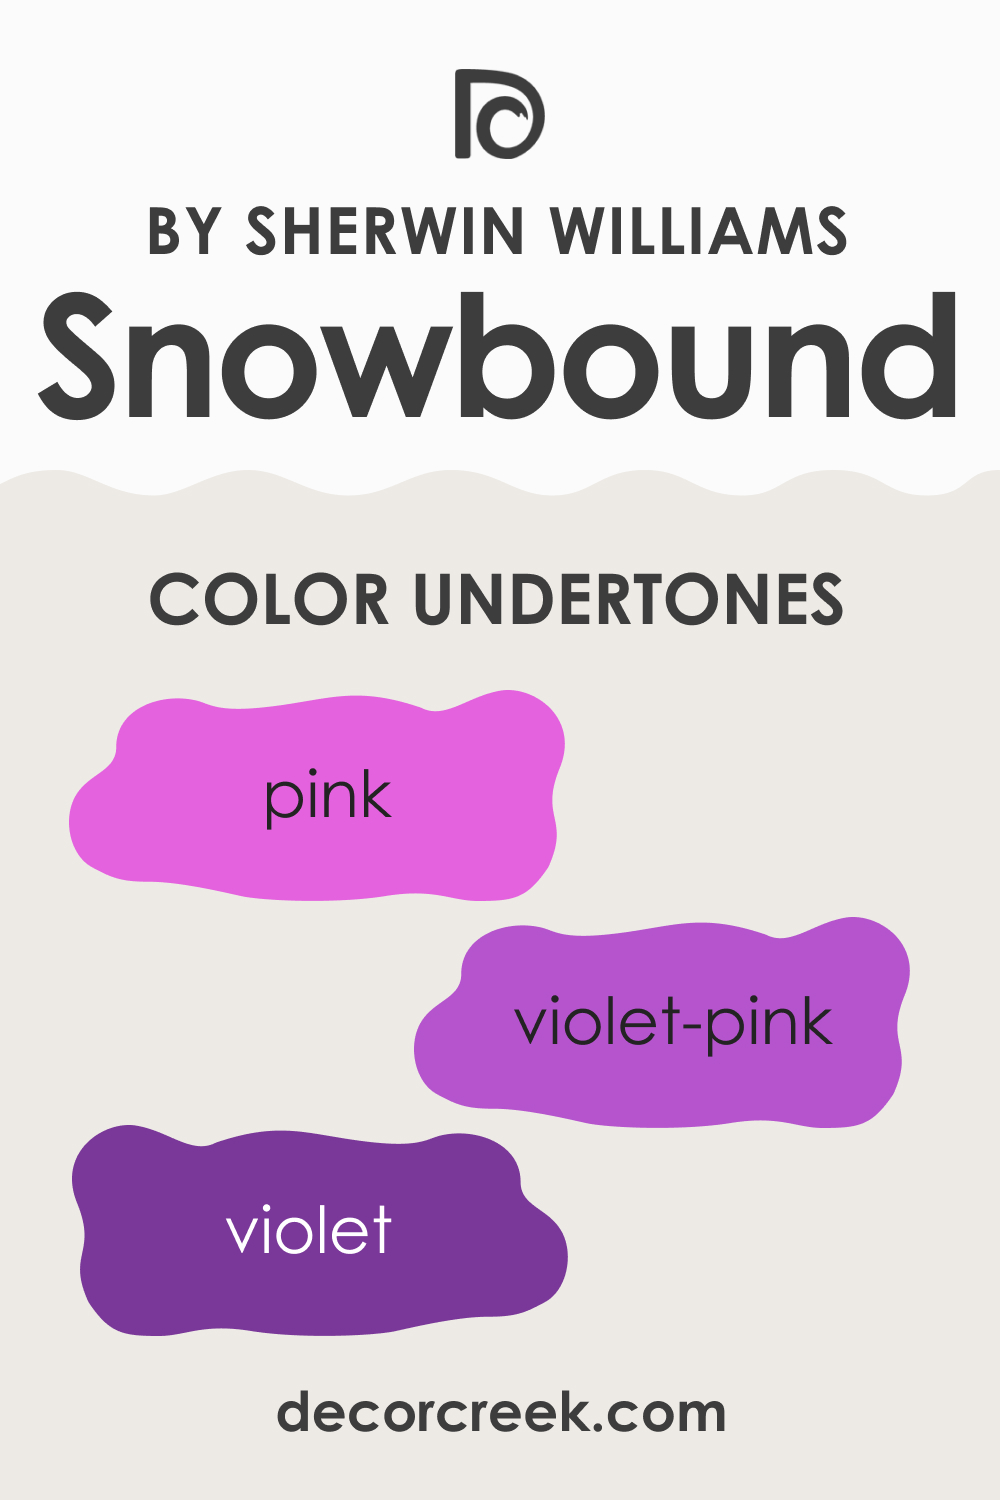 Undertones of Snowbound SW 7004